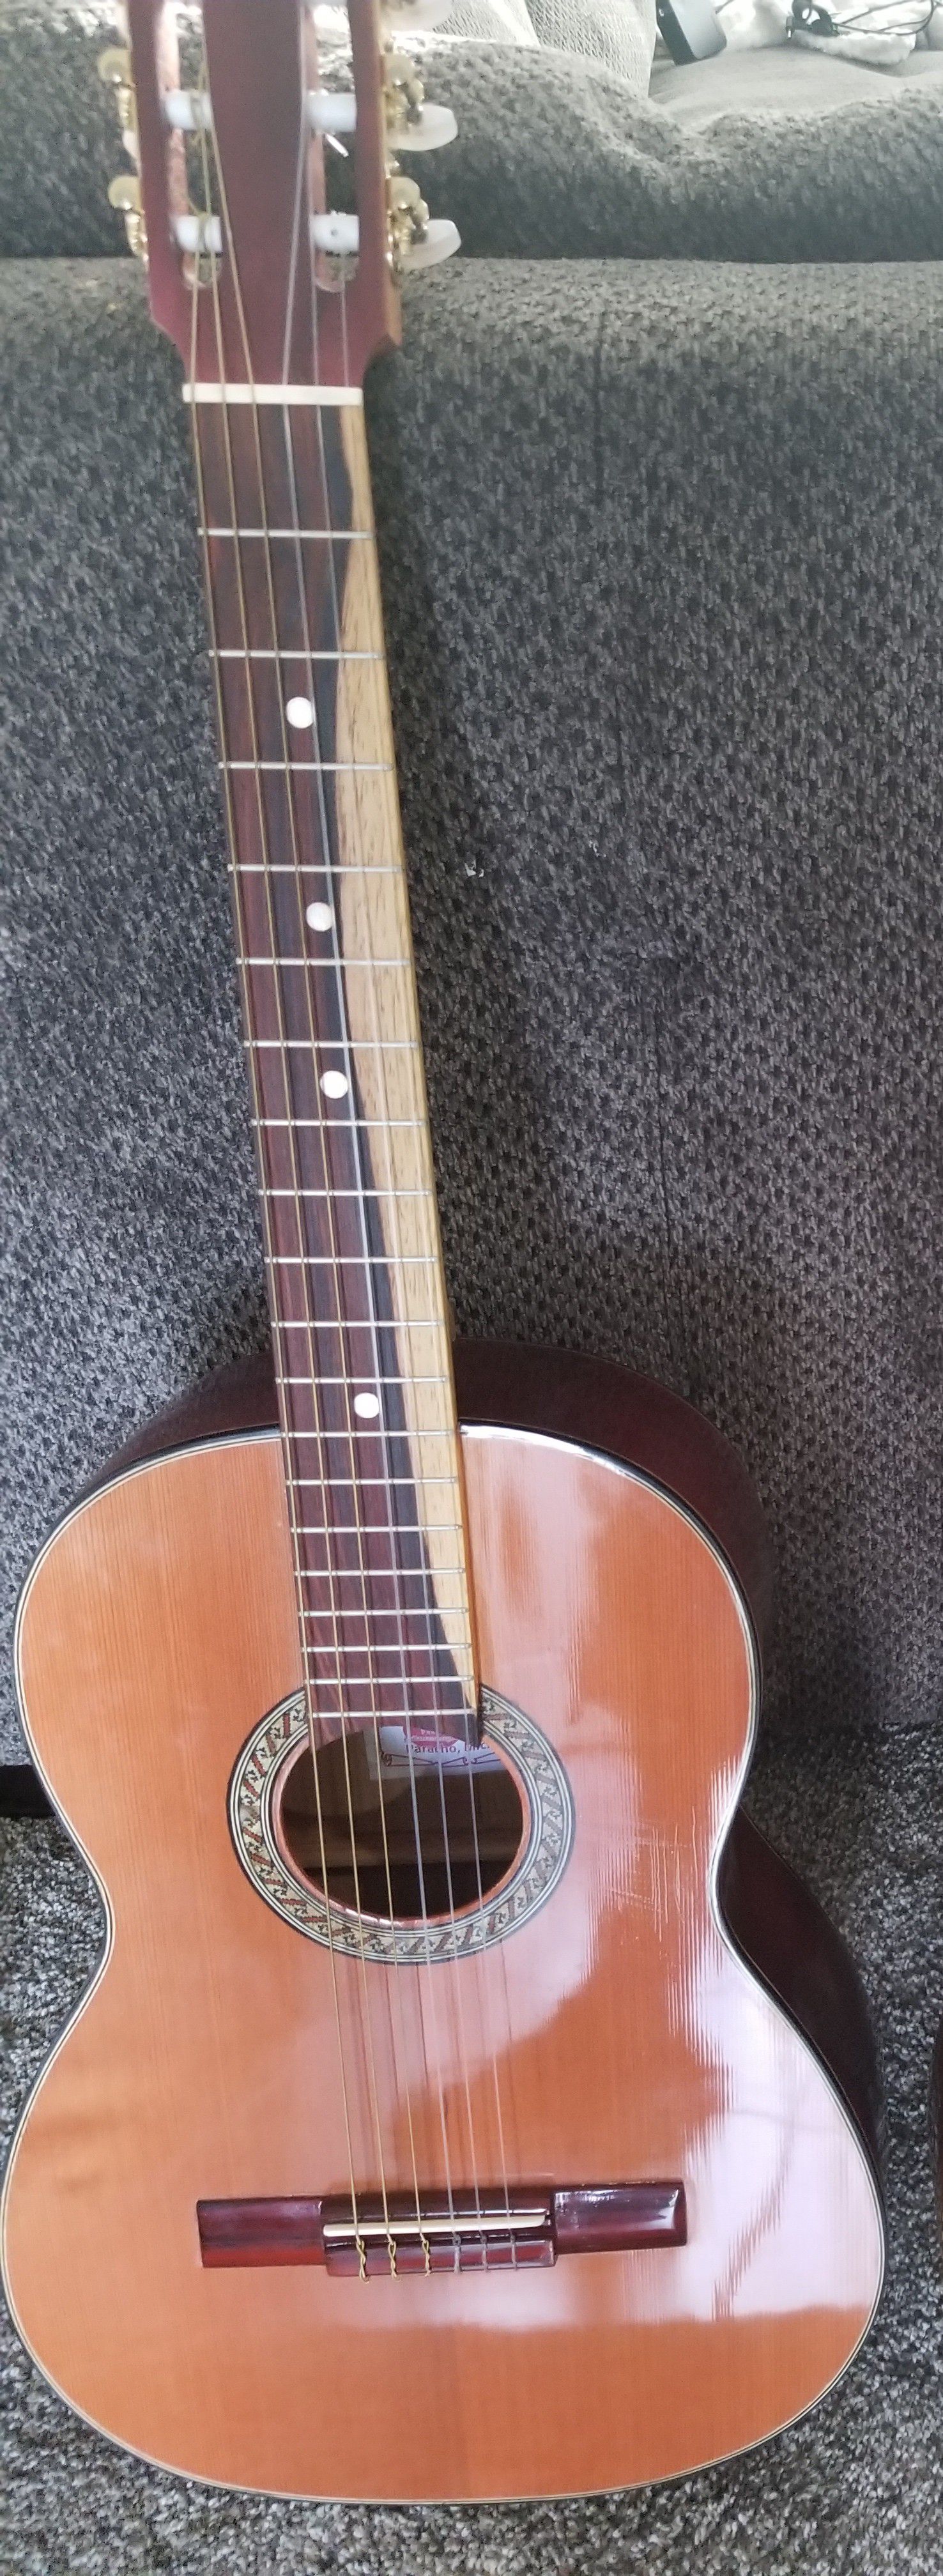 Handmade acoustic guitar hecha a mano guitarra